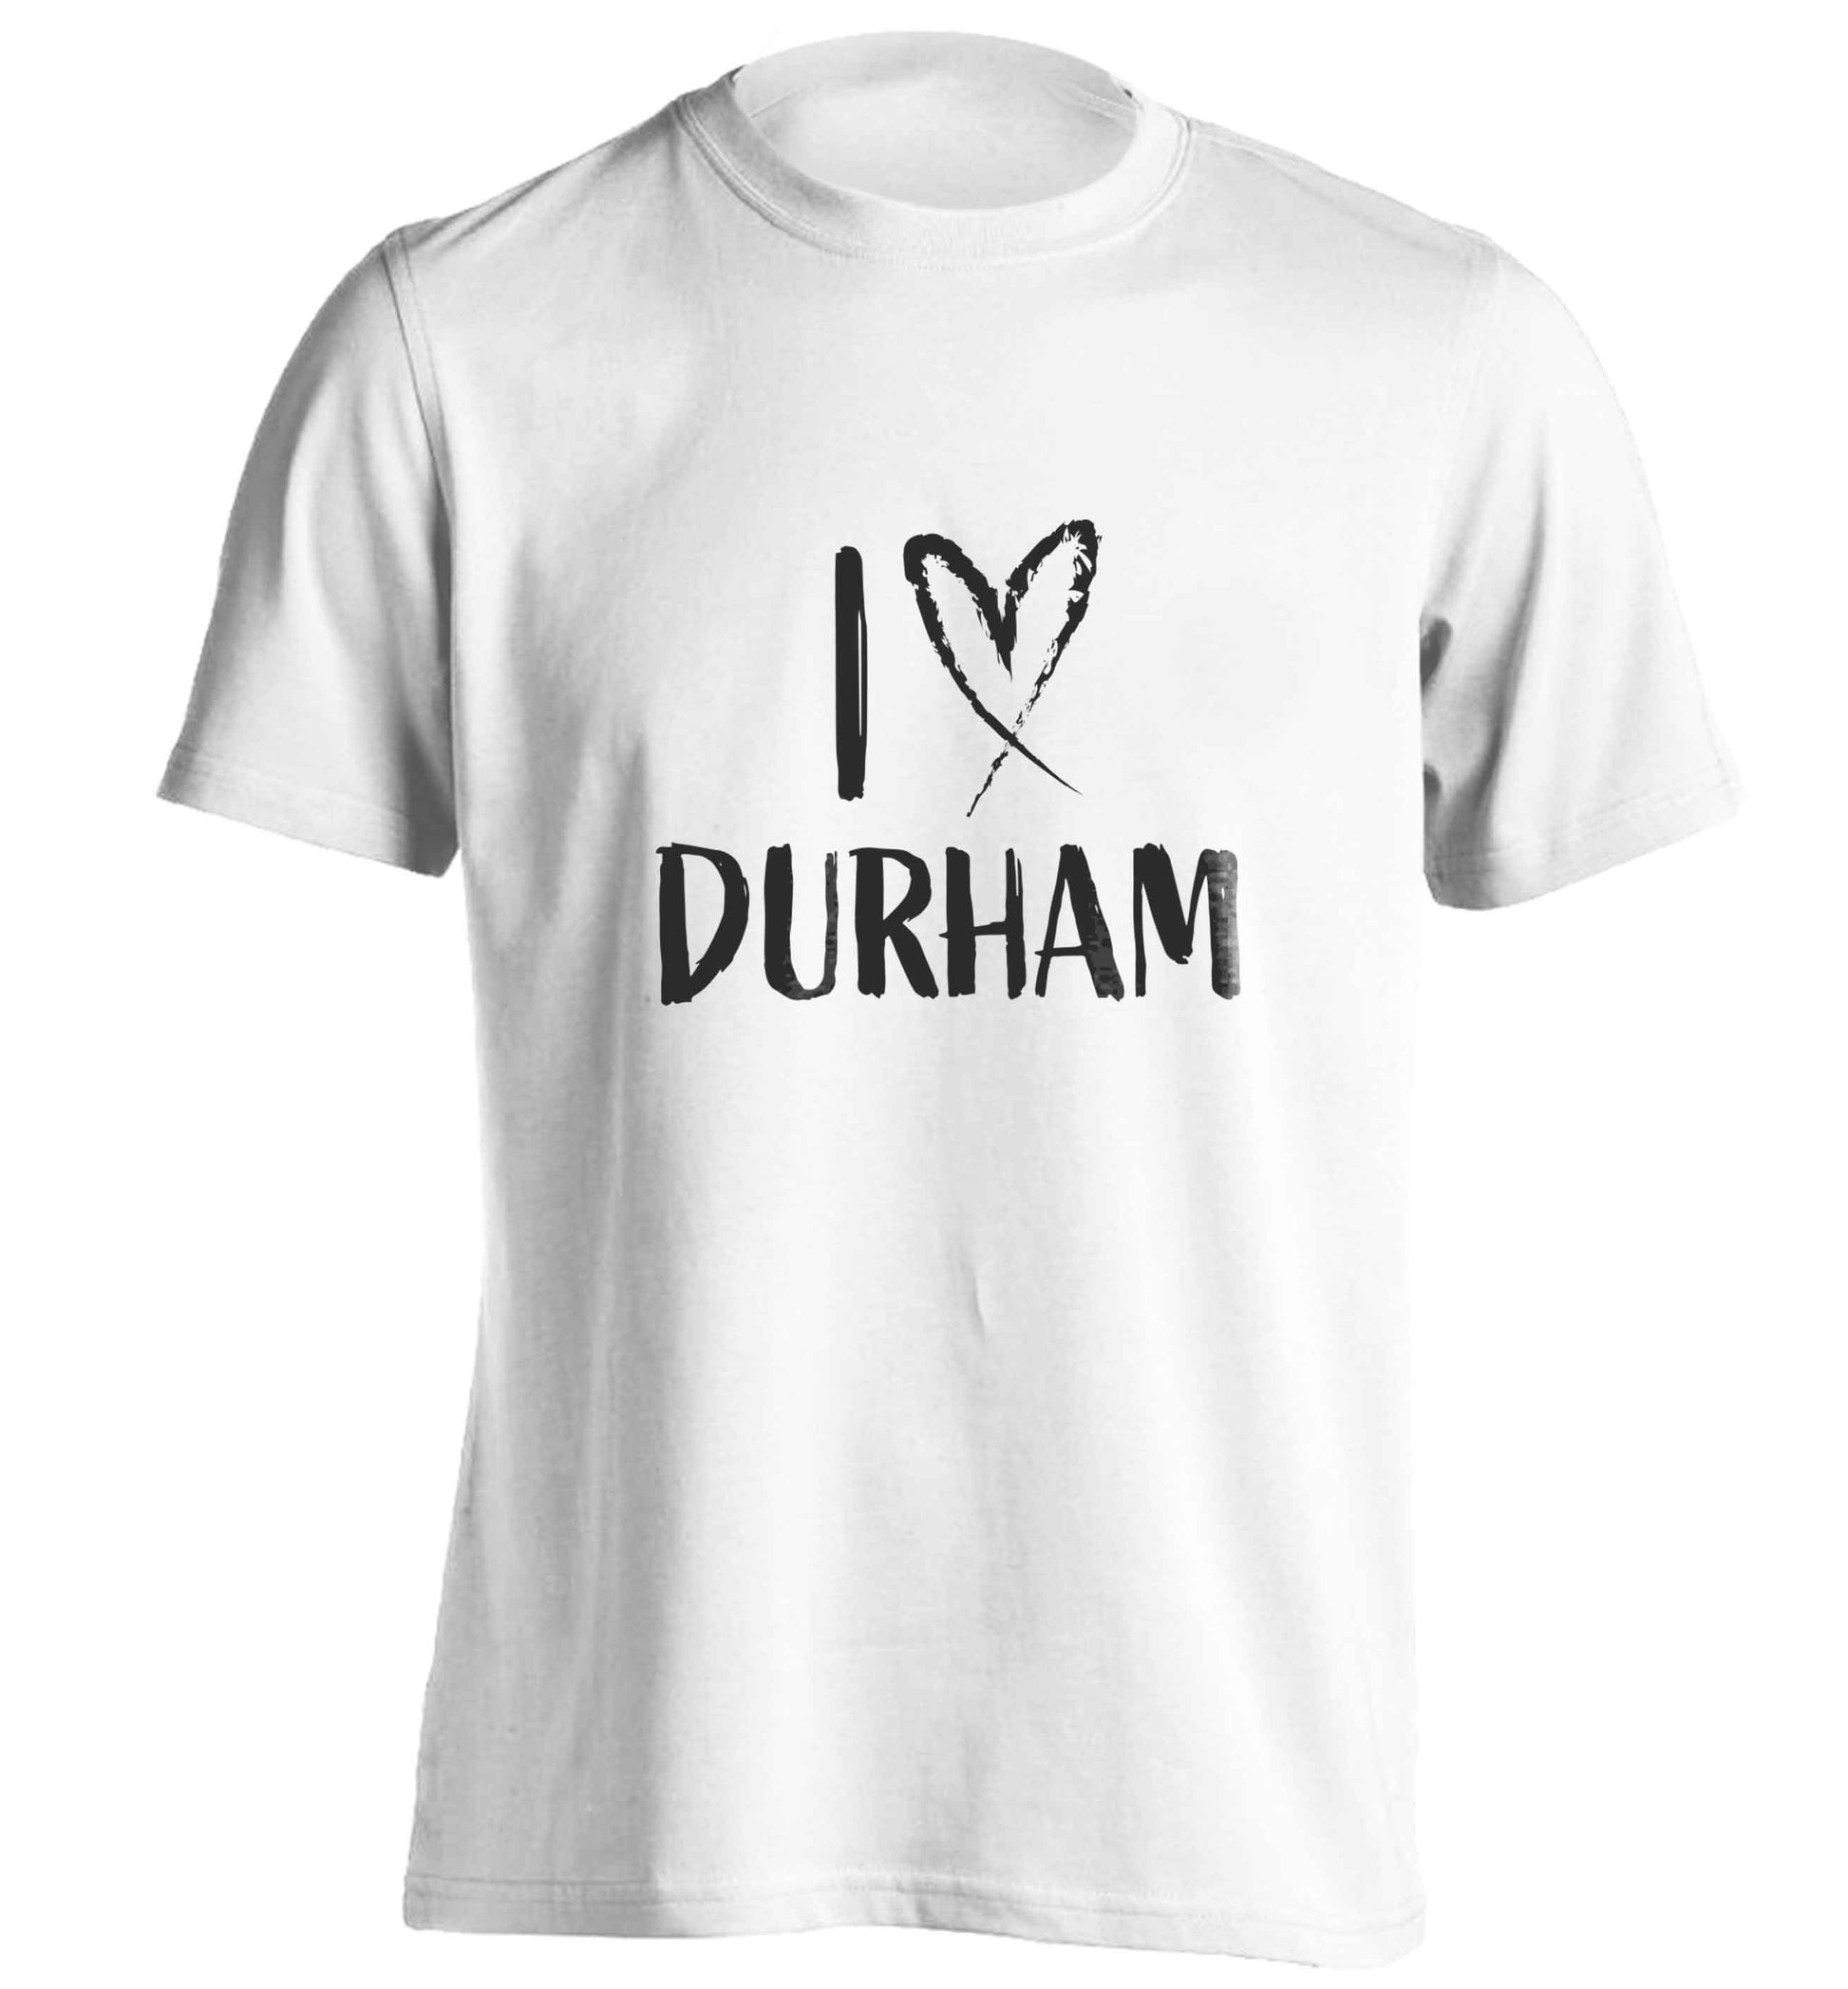 I love Durham adults unisex white Tshirt 2XL